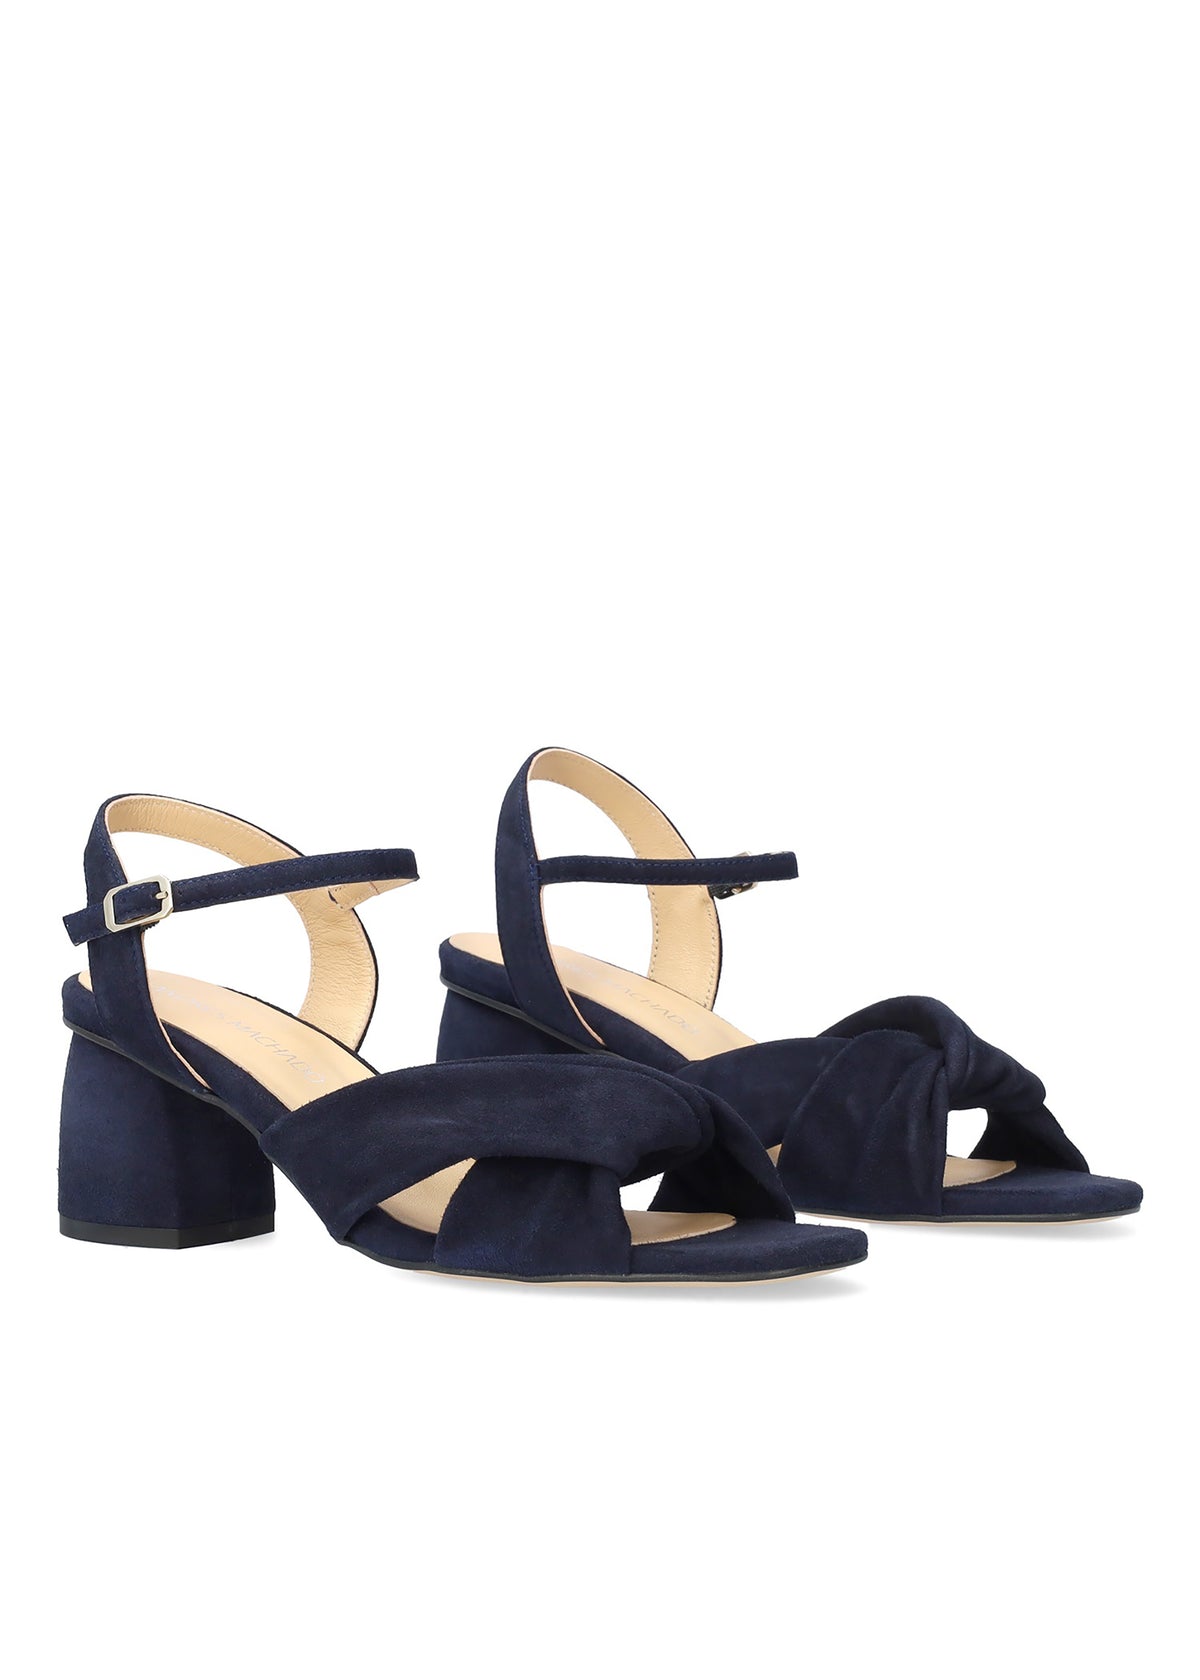 Sandals with stiletto heels - Nerea, dark blue nubuck leather